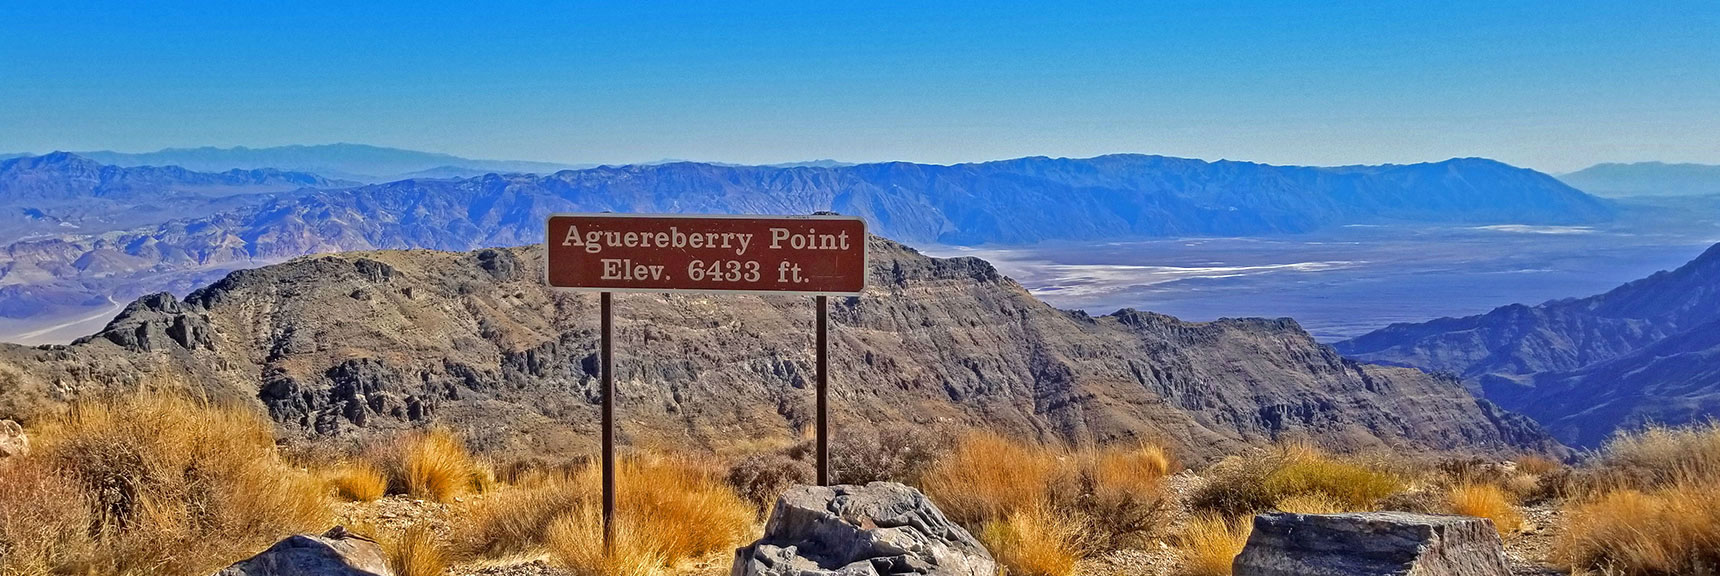 Aguereberry Point | Death Valley National Park, California